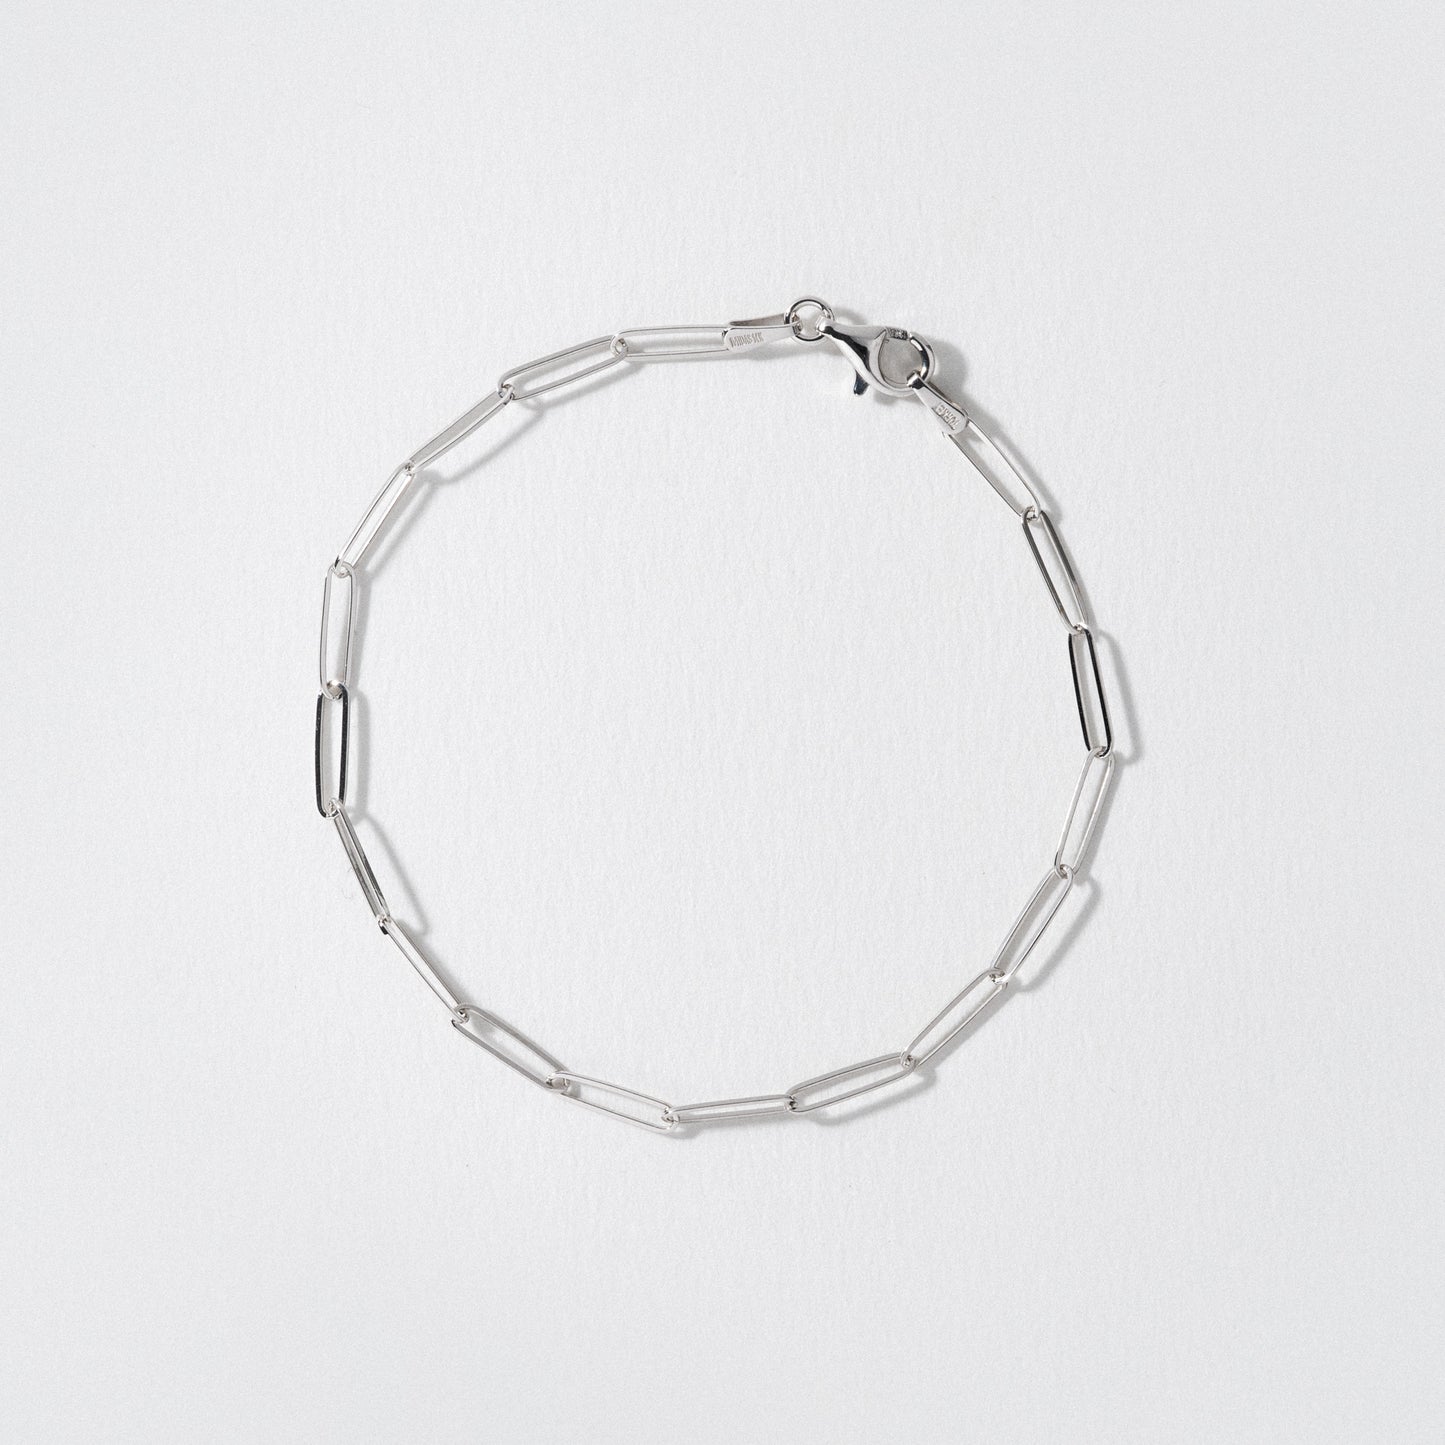 White Gold Chain Link Bracelet - Polished 2.6mm